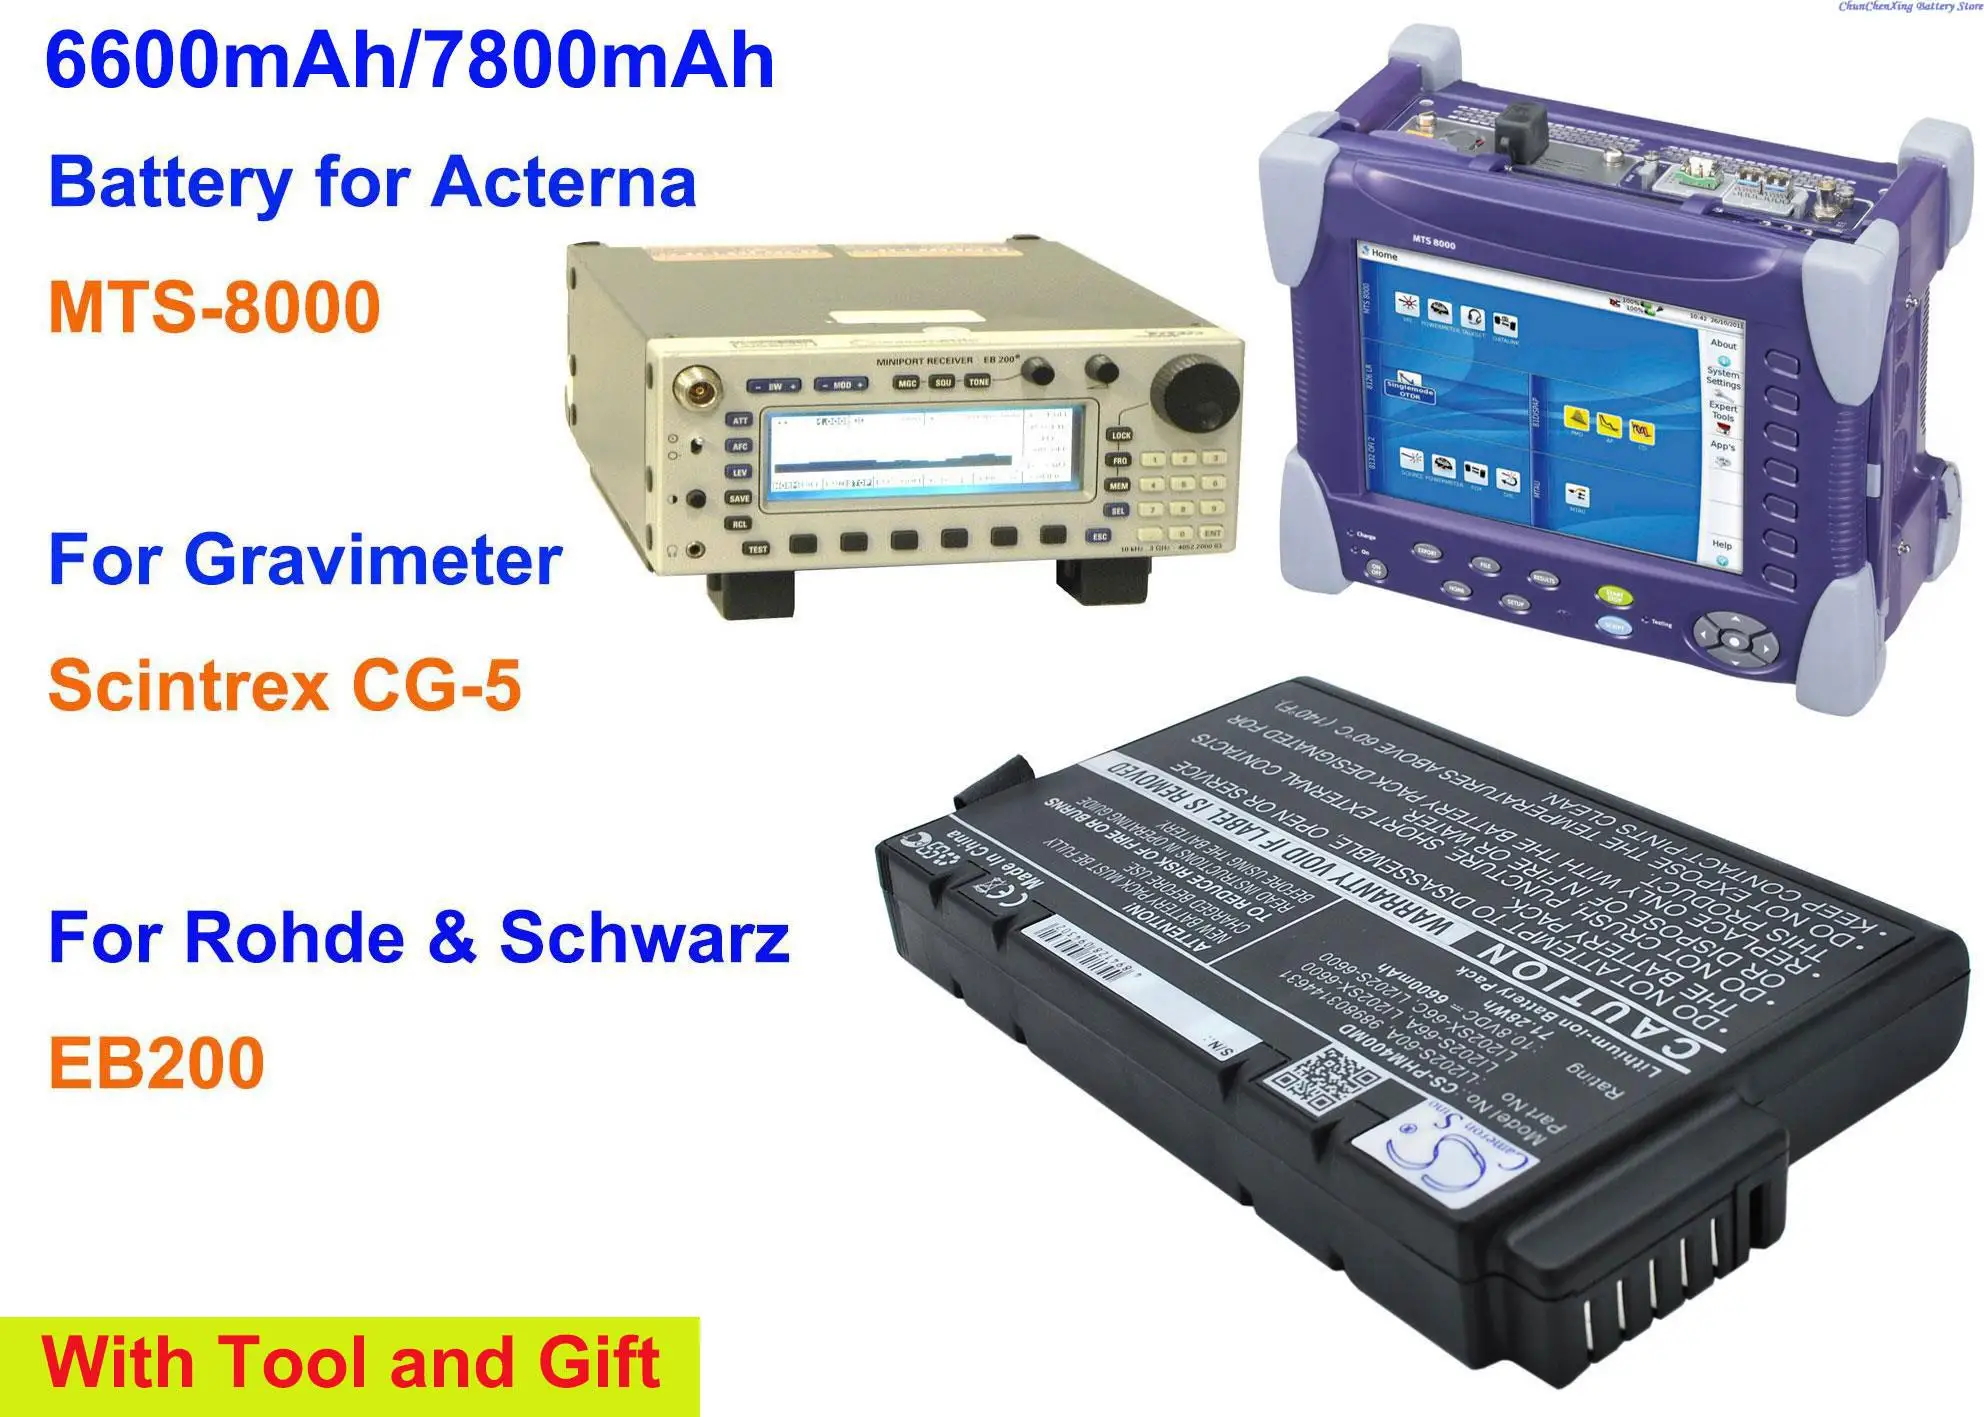 

Cameron Sino 6600mAh/7800mAh Battery for Acterna MTS-8000, For Gravimeter Scintrex CG-5, For Rohde & Schwarz EB200